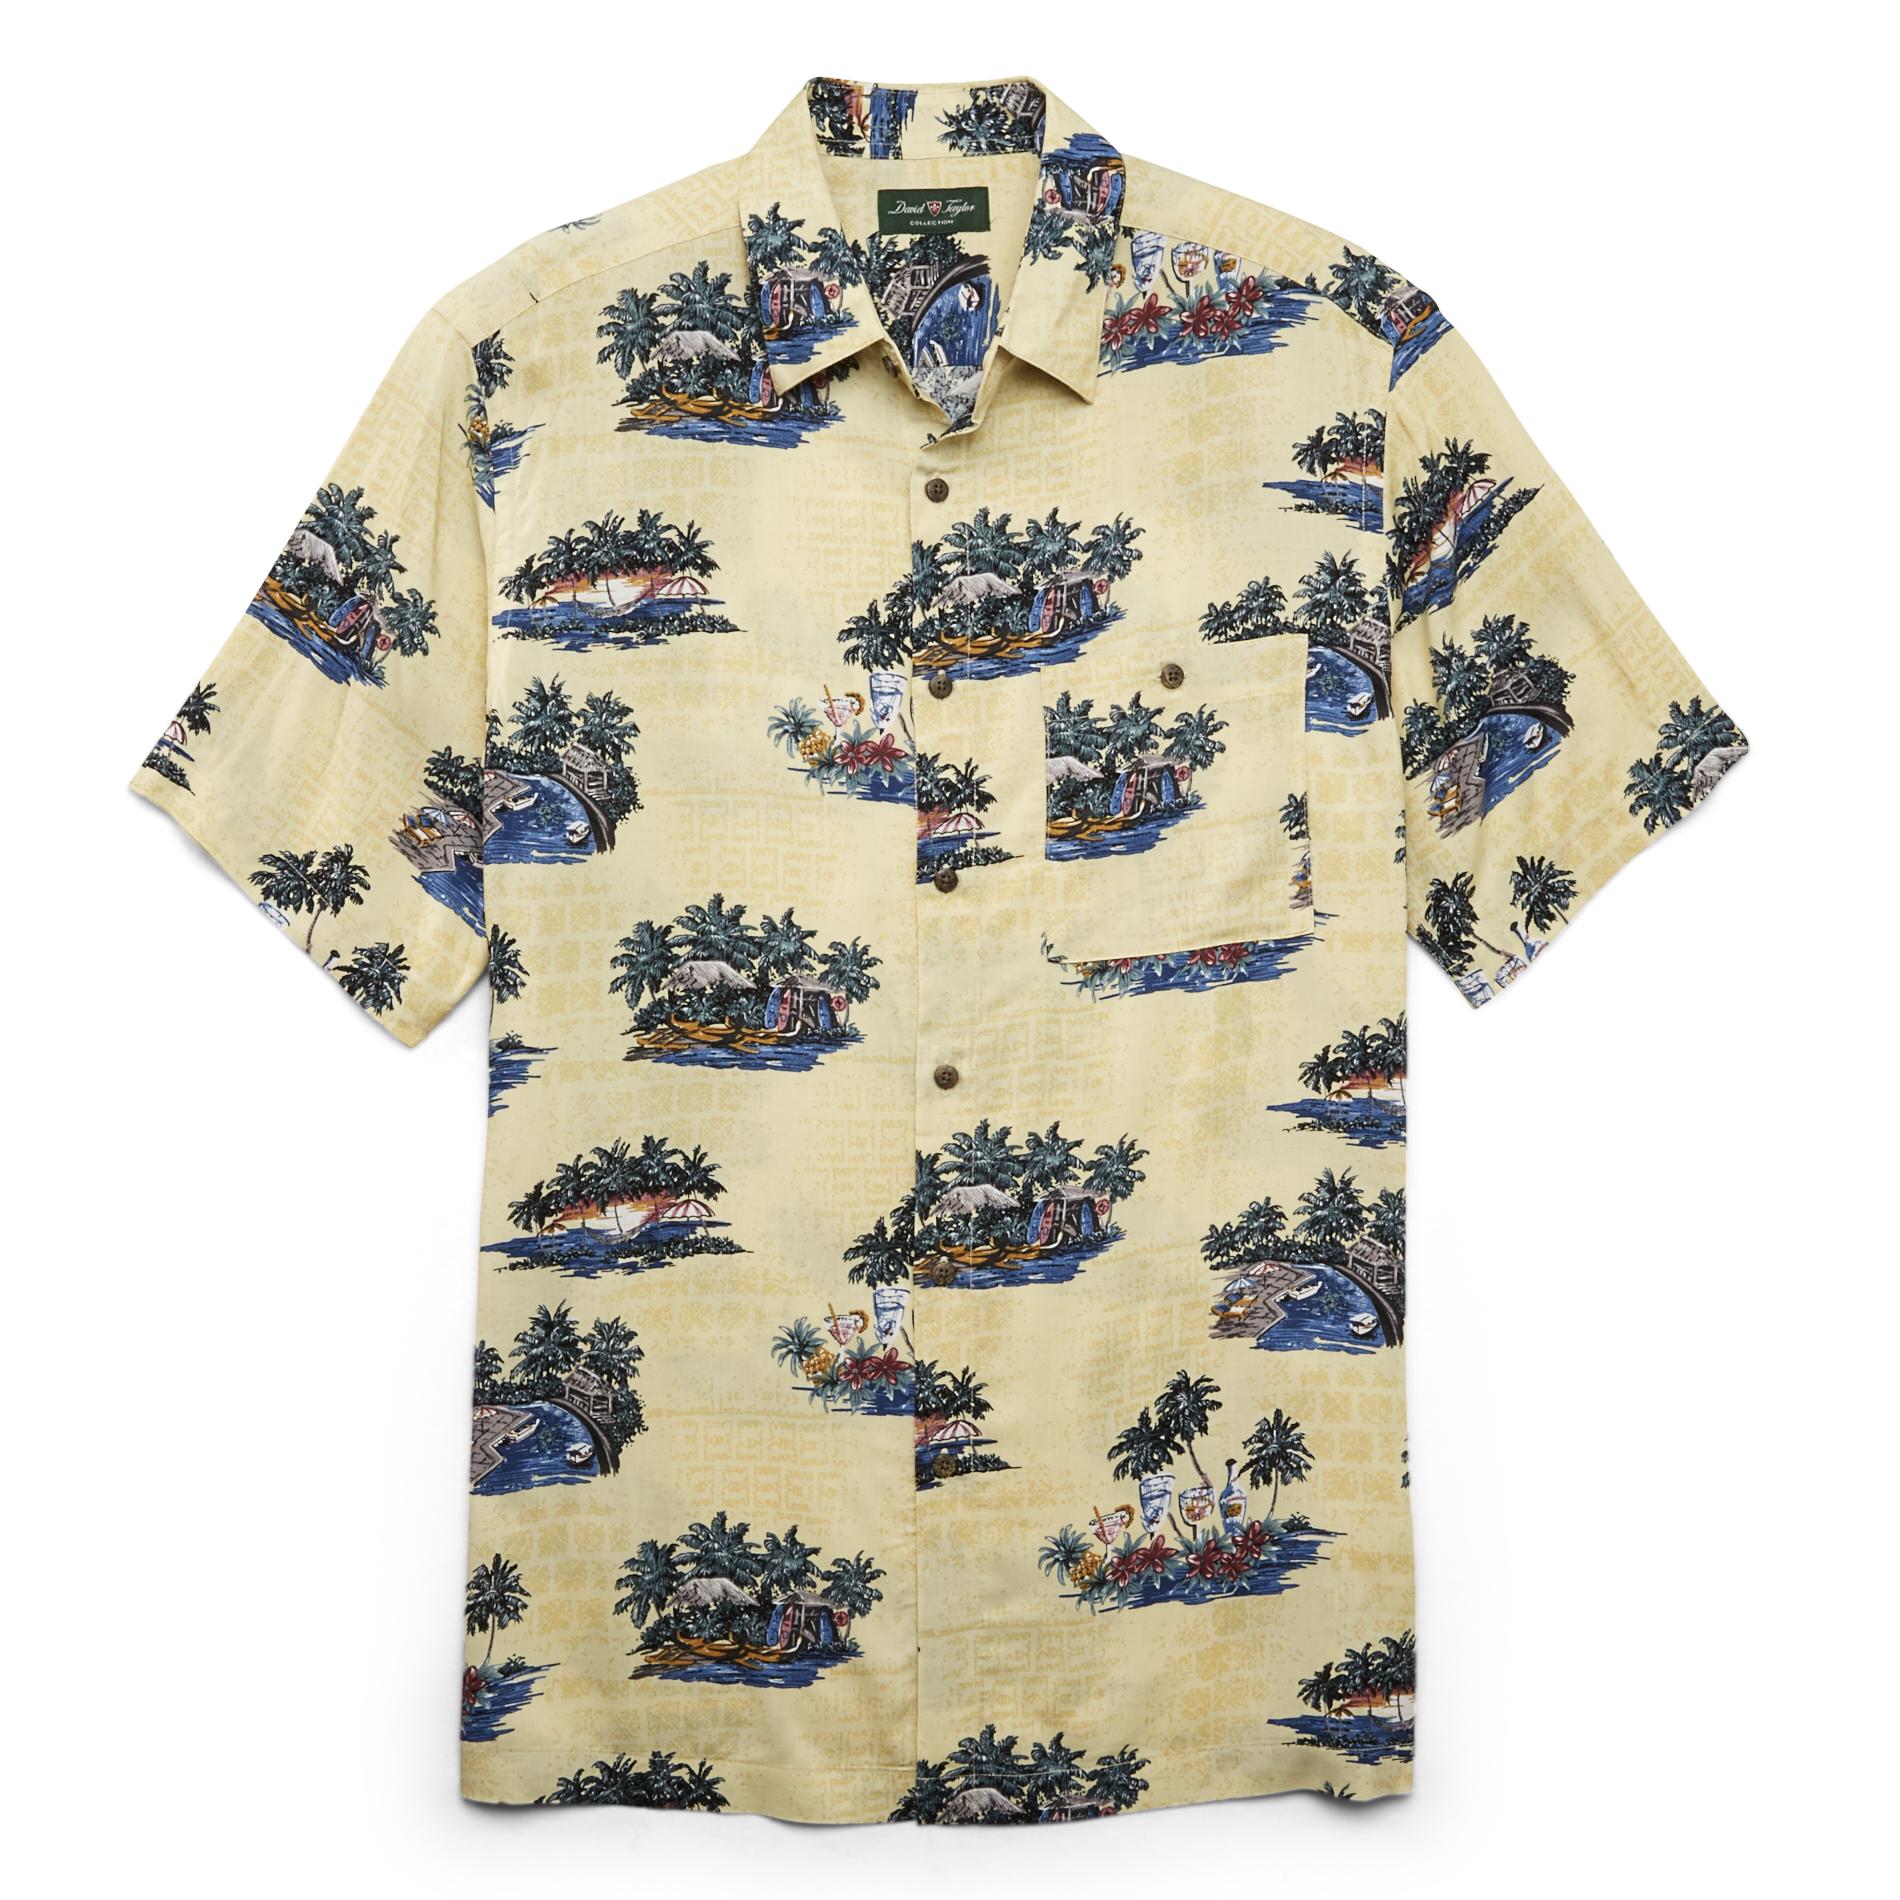 David Taylor Collection Men's Short-Sleeve Button-Front Shirt - Islands